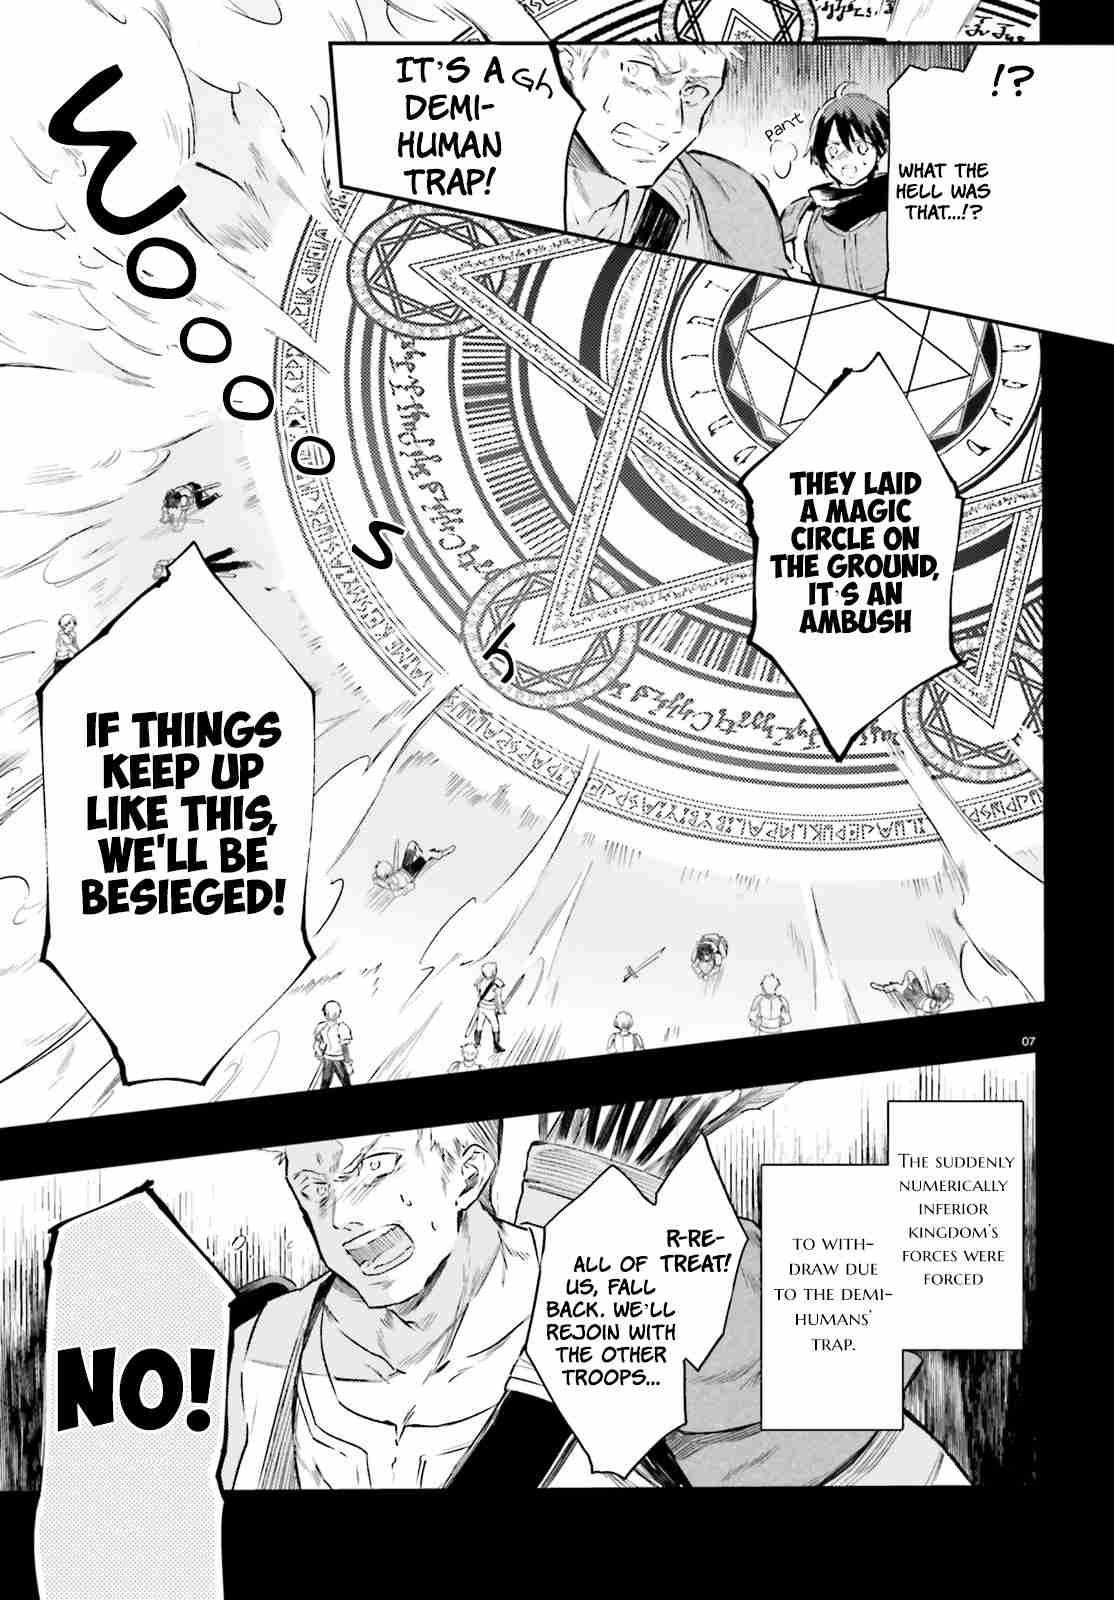 Re: Zero Kara Hajimeru Isekai Seikatsu Kenki Koiuta Vol. 1 Ch. 0 The "Demon" That Descended onto the Battlefield